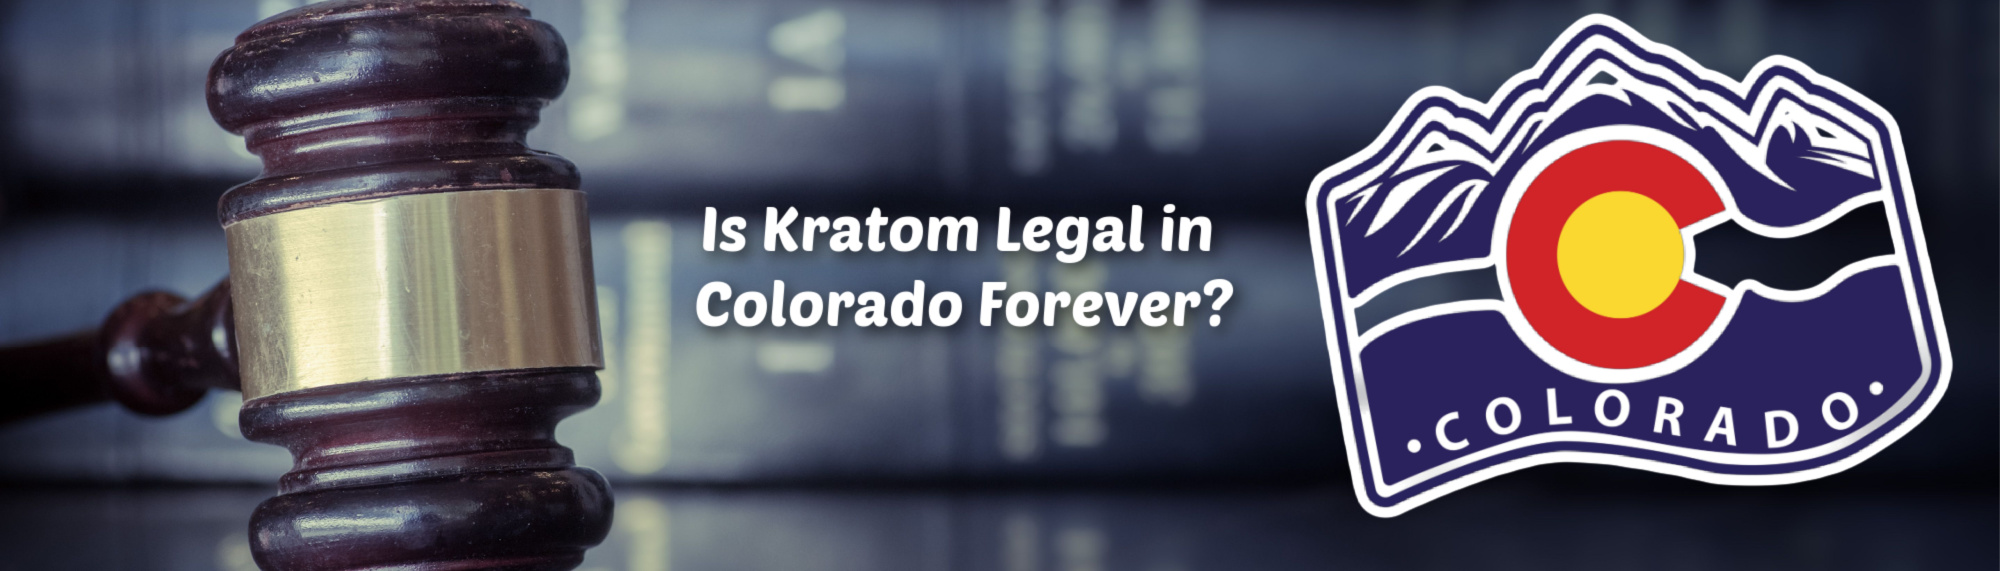 image of is kratom legal in colorado forever